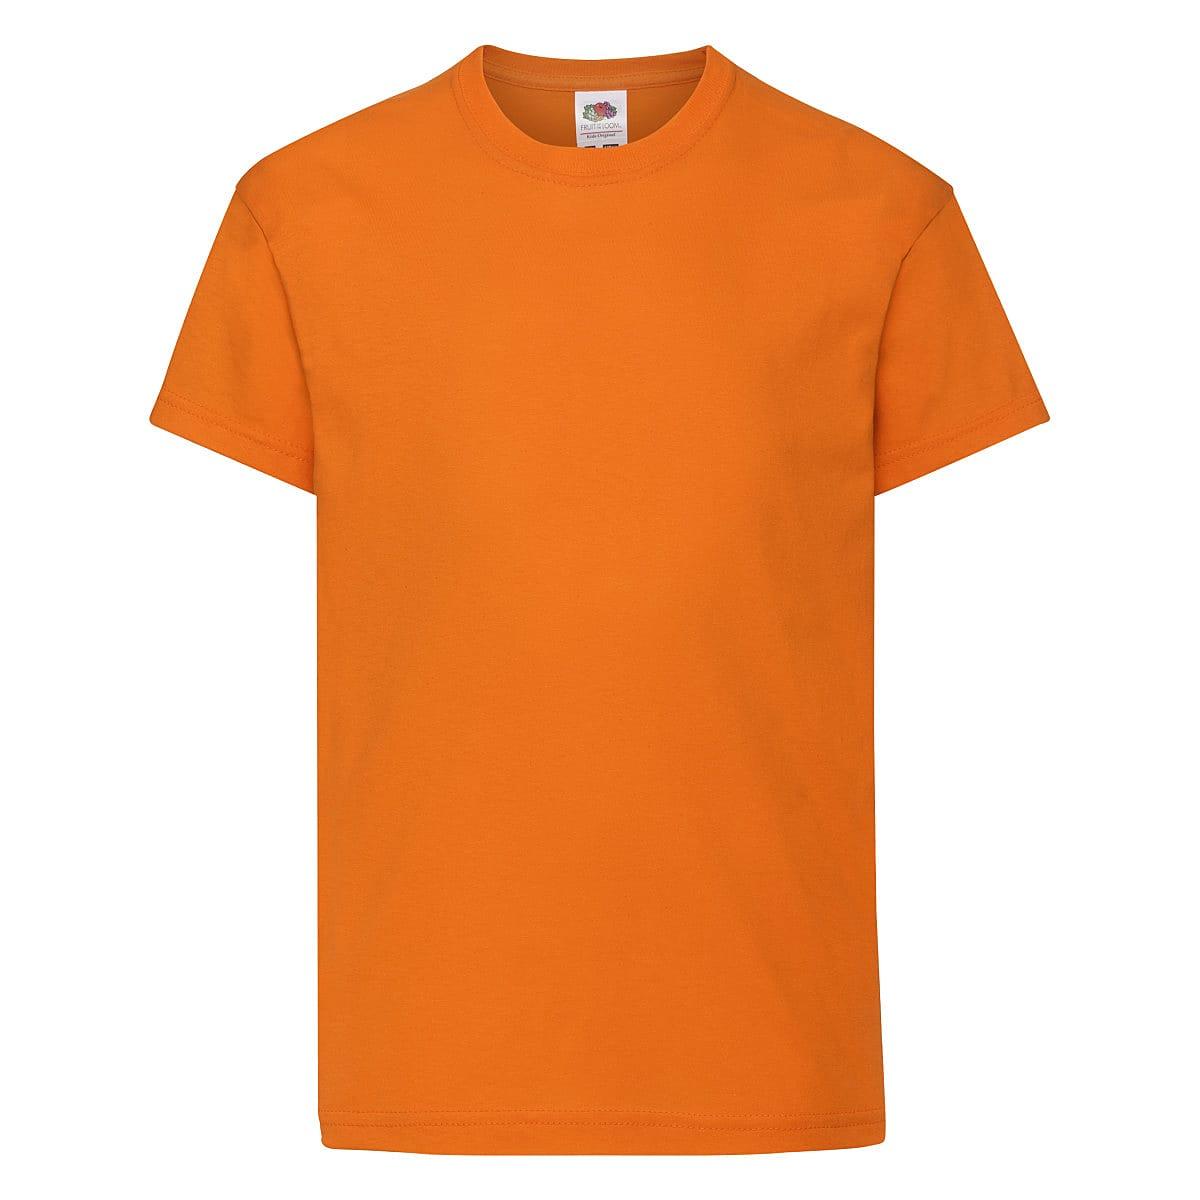 Fruit Of The Loom Kids Original T-Shirt in Orange (Product Code: 61019)